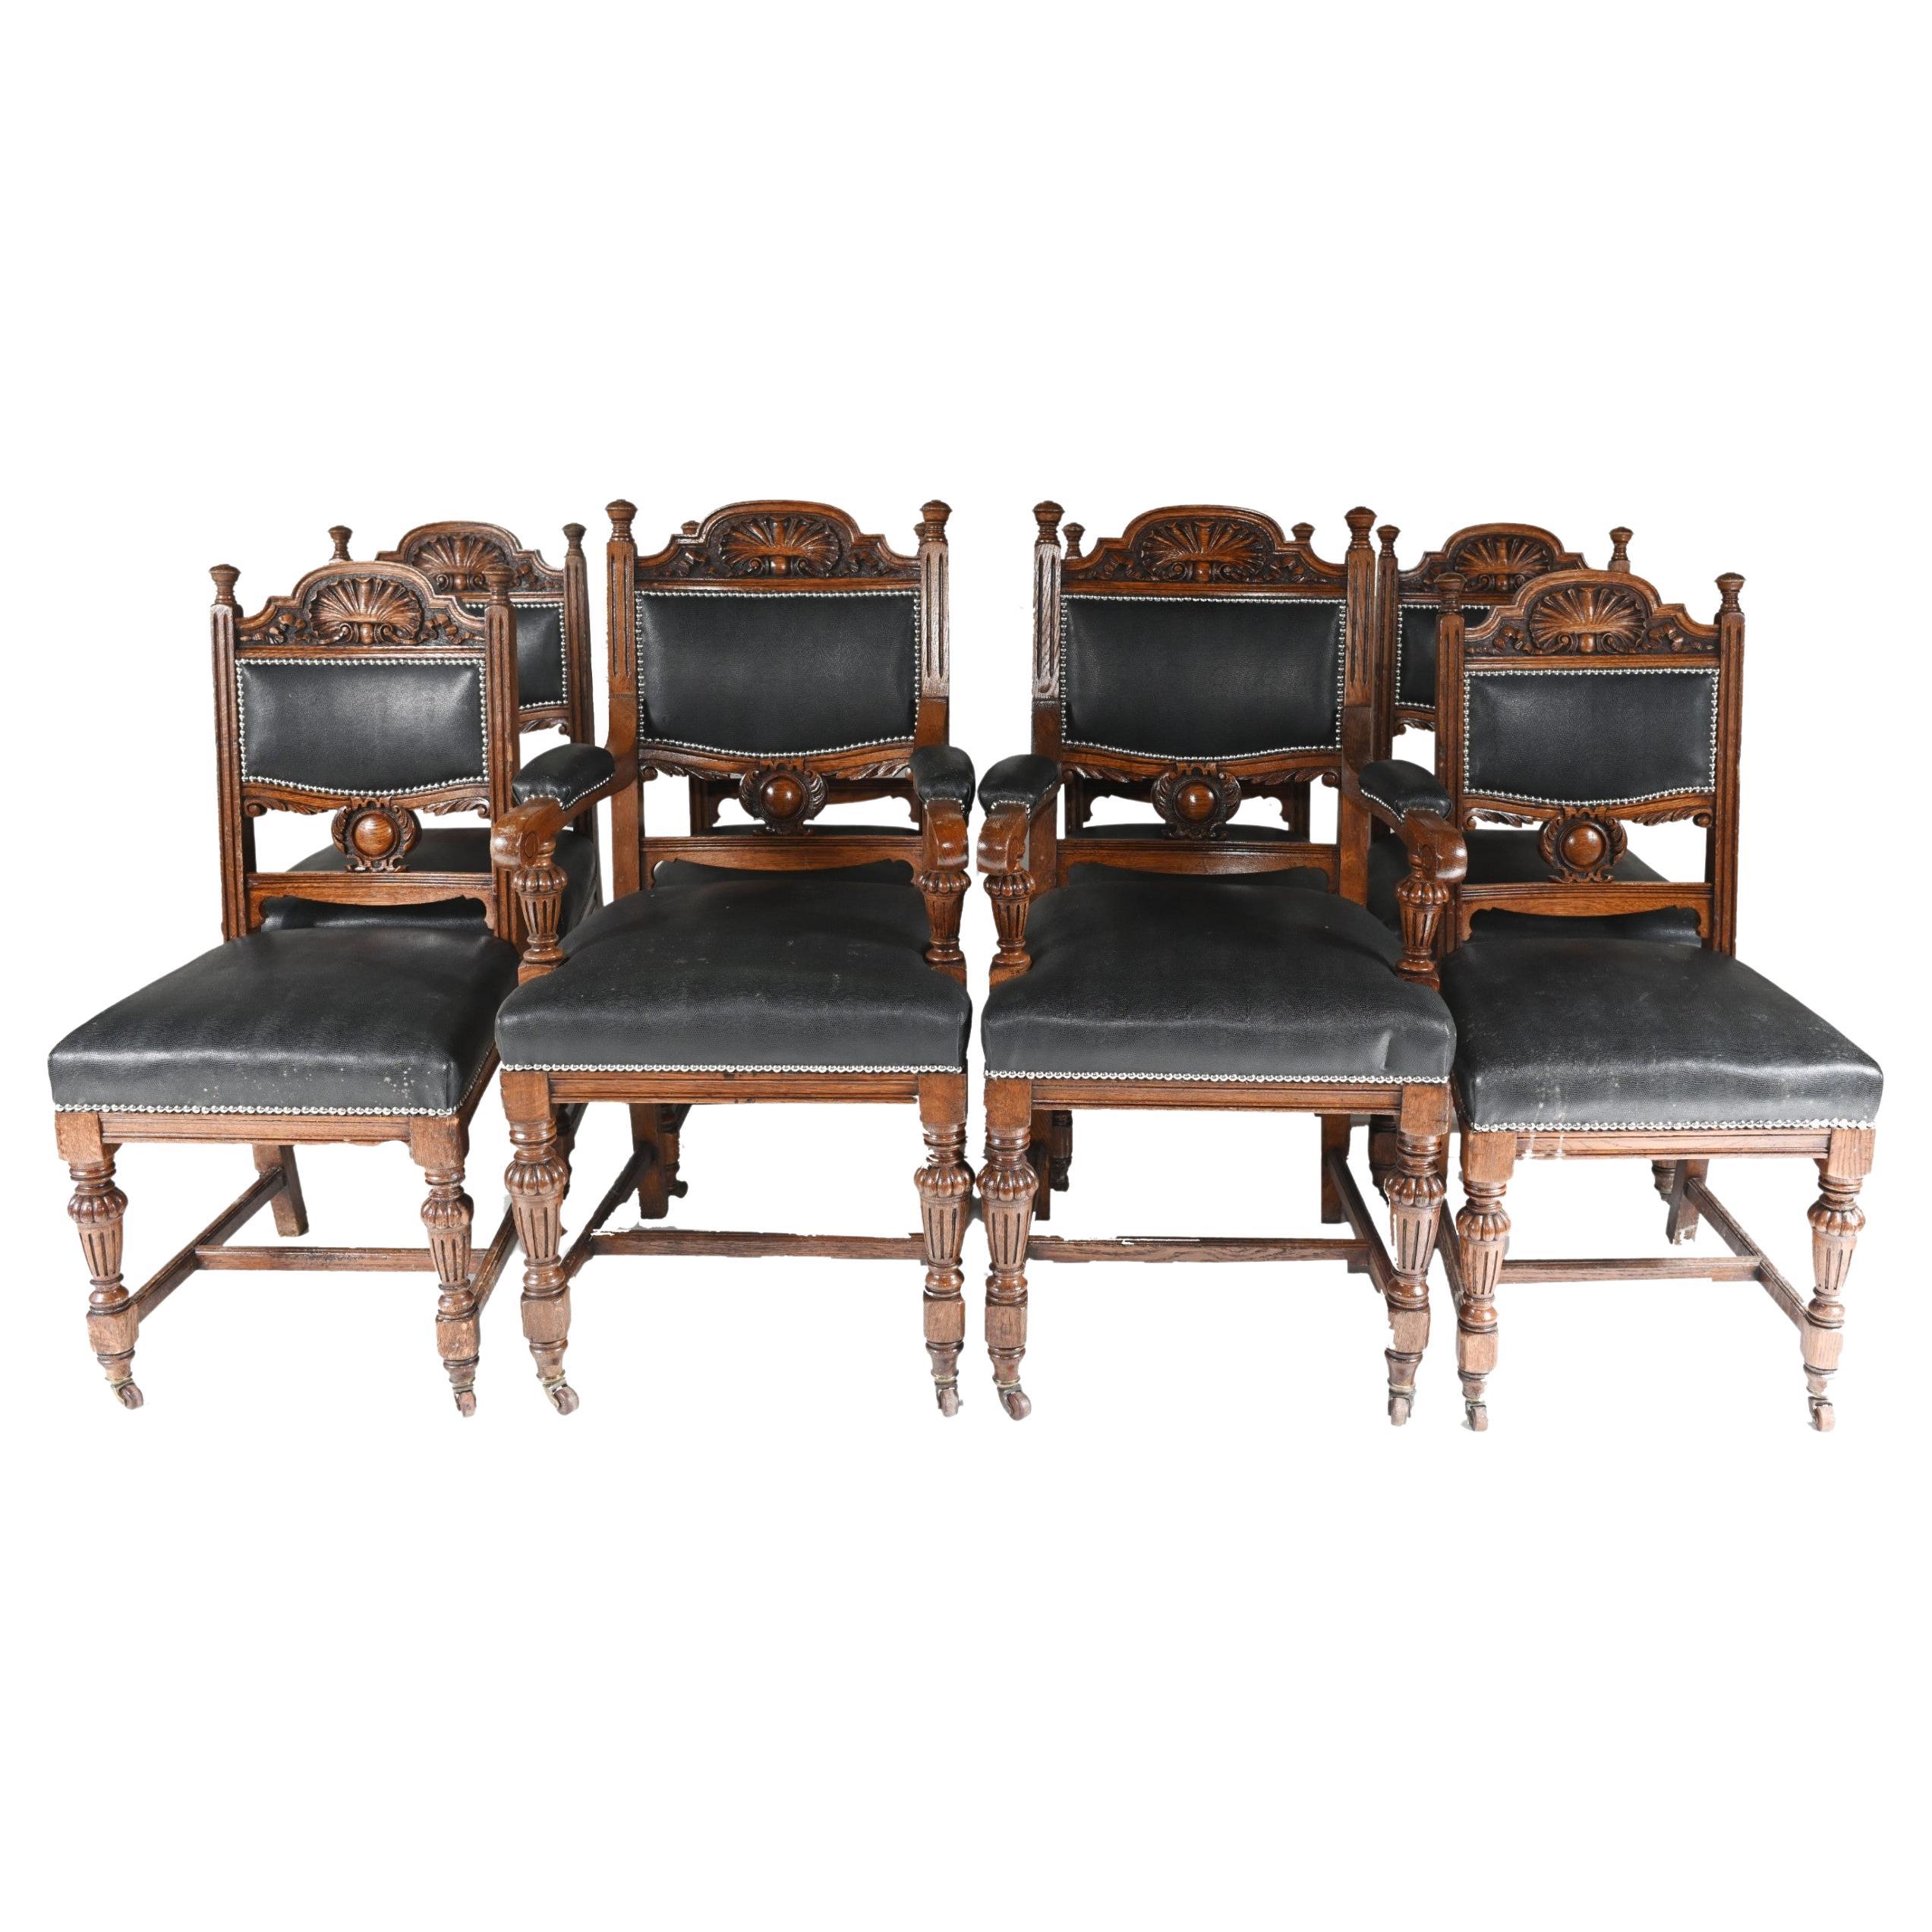 Set 8 Farmhouse Dining Chairs English Oak Rustic